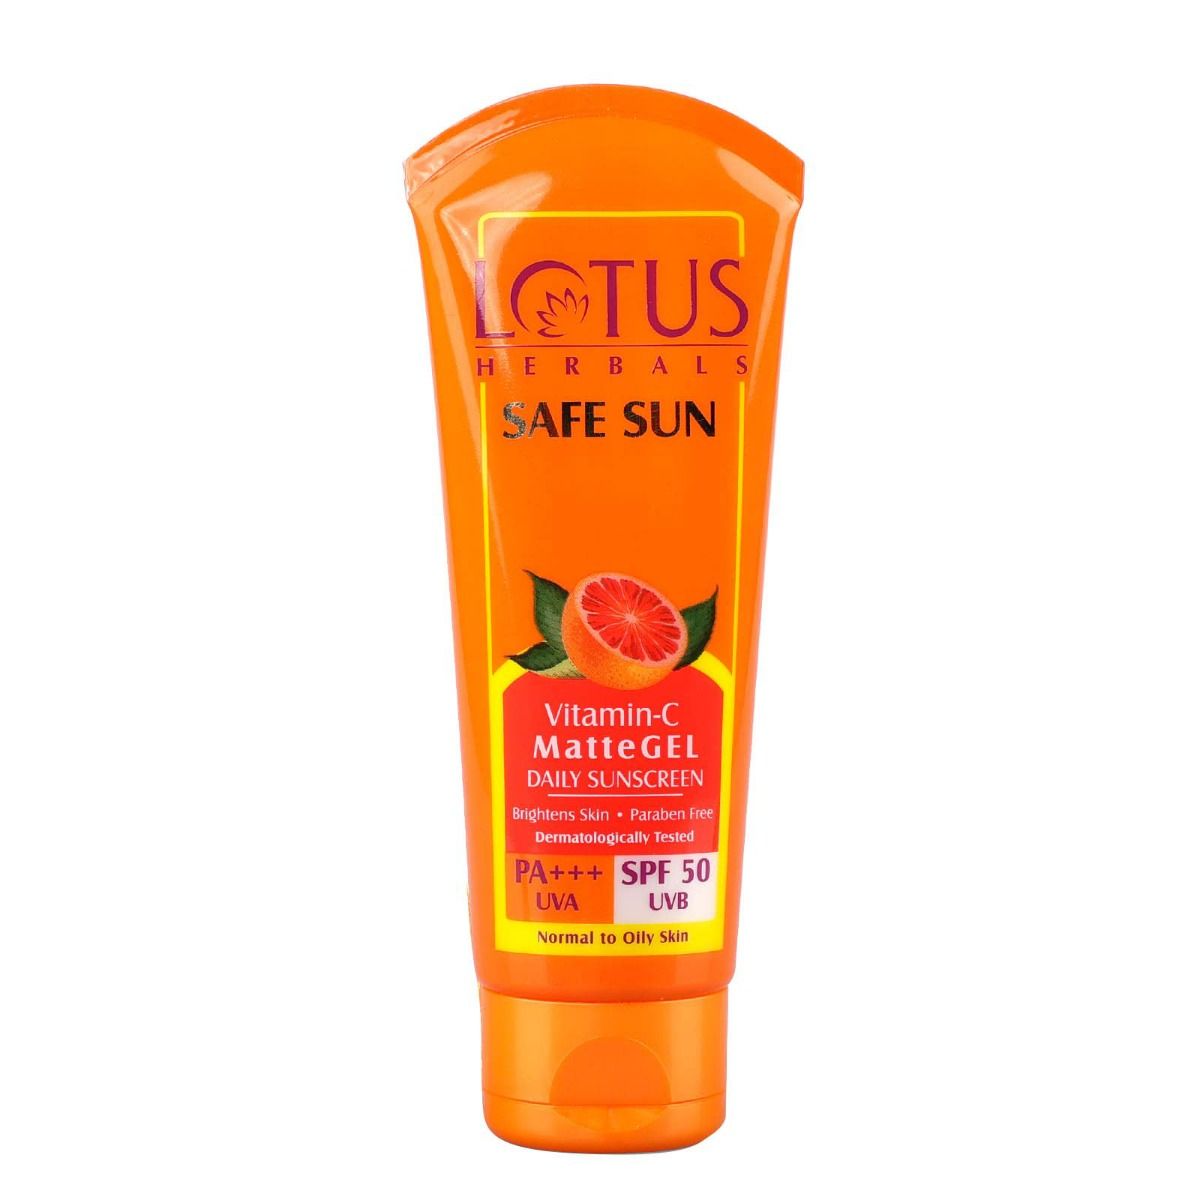 Lotus Herbals Safe Sun Vitamin-C Matte Gel SPF 50 PA+++ Sunscreen, 75 gm, Pack of 1 